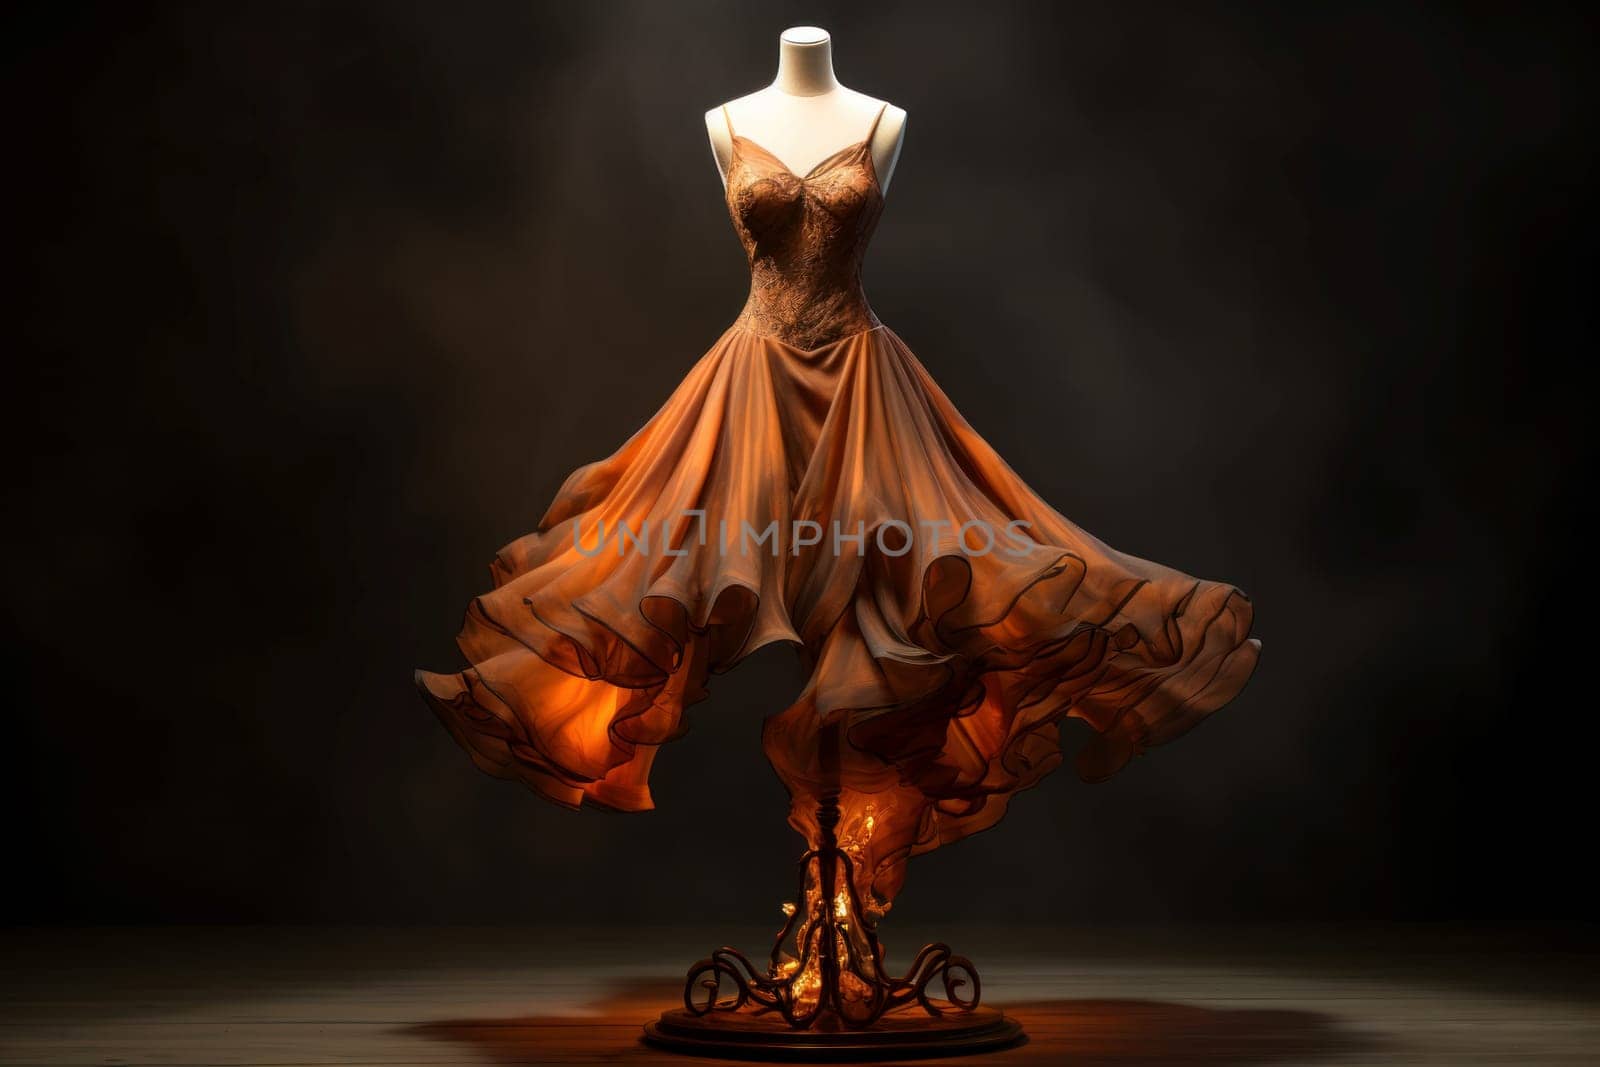 Elegant twirling dress on mannequin by ylivdesign